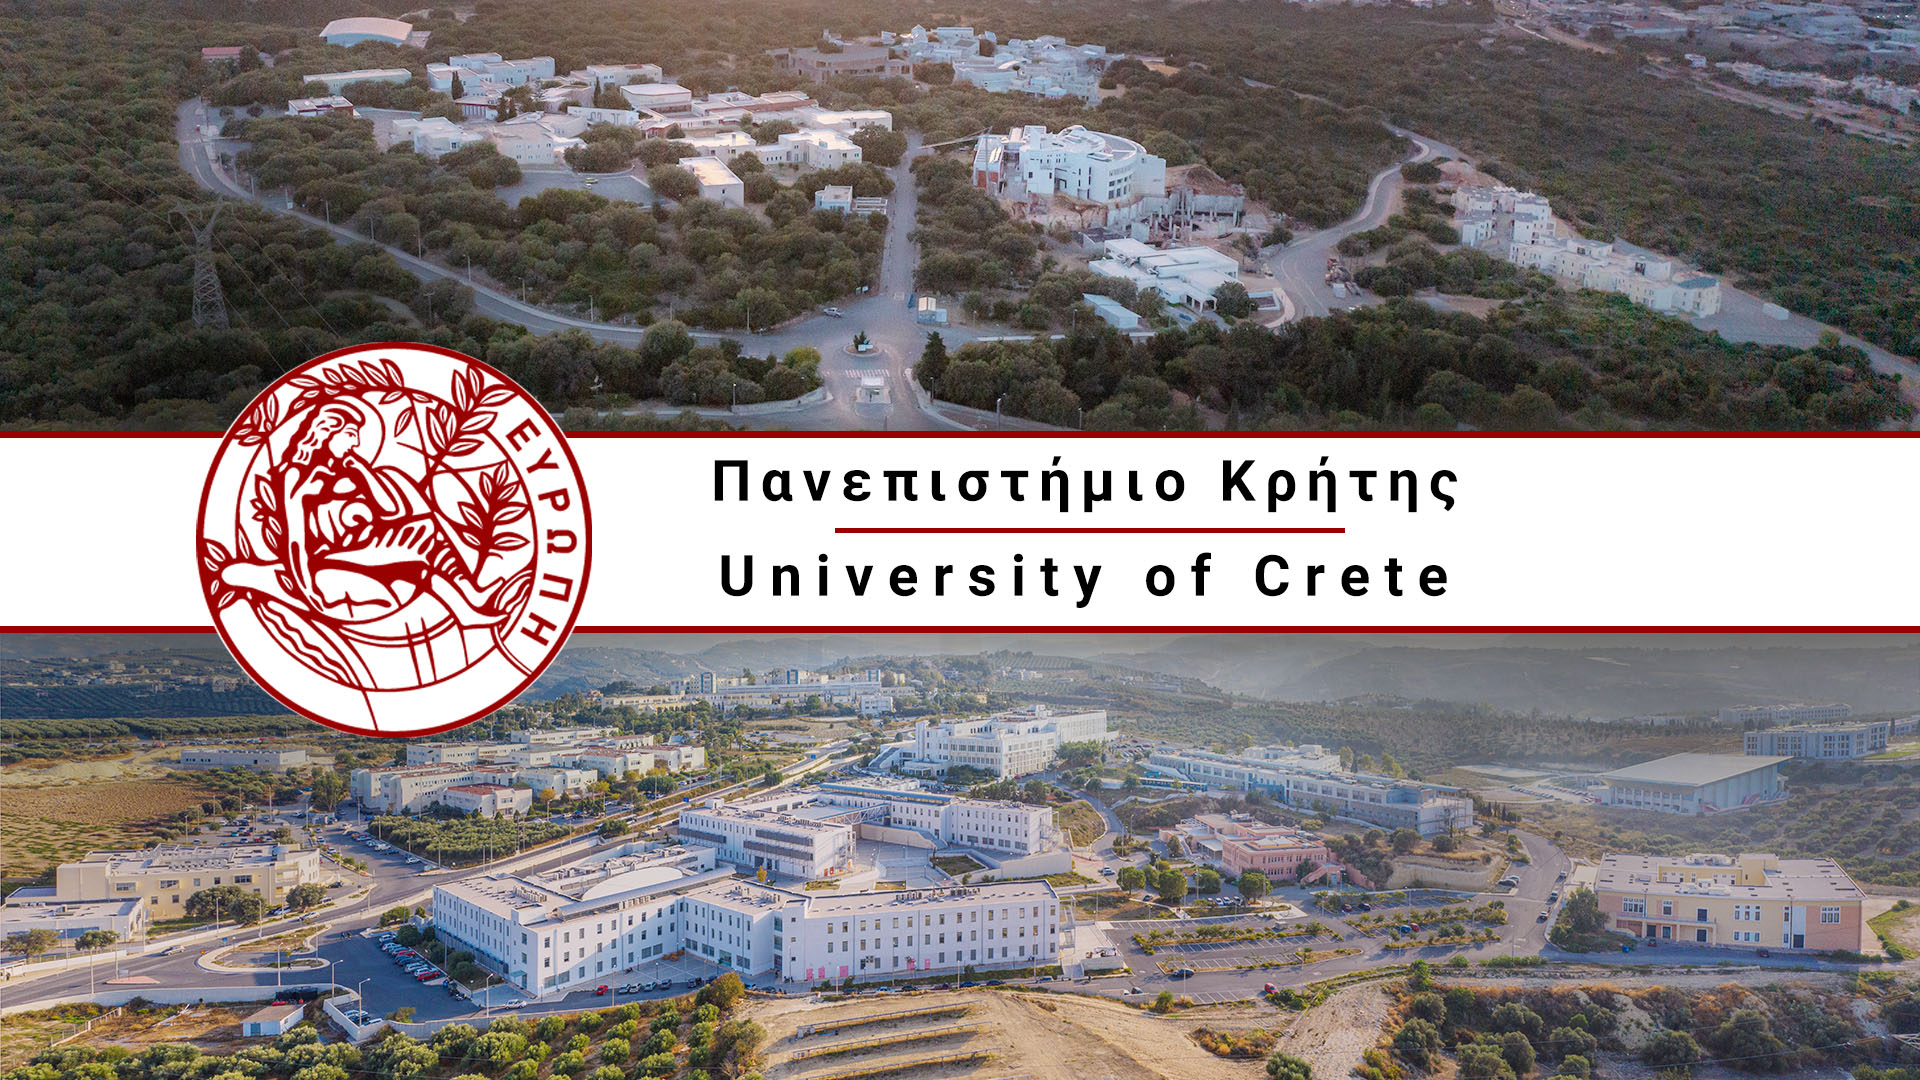 Video presentation of University of Crete